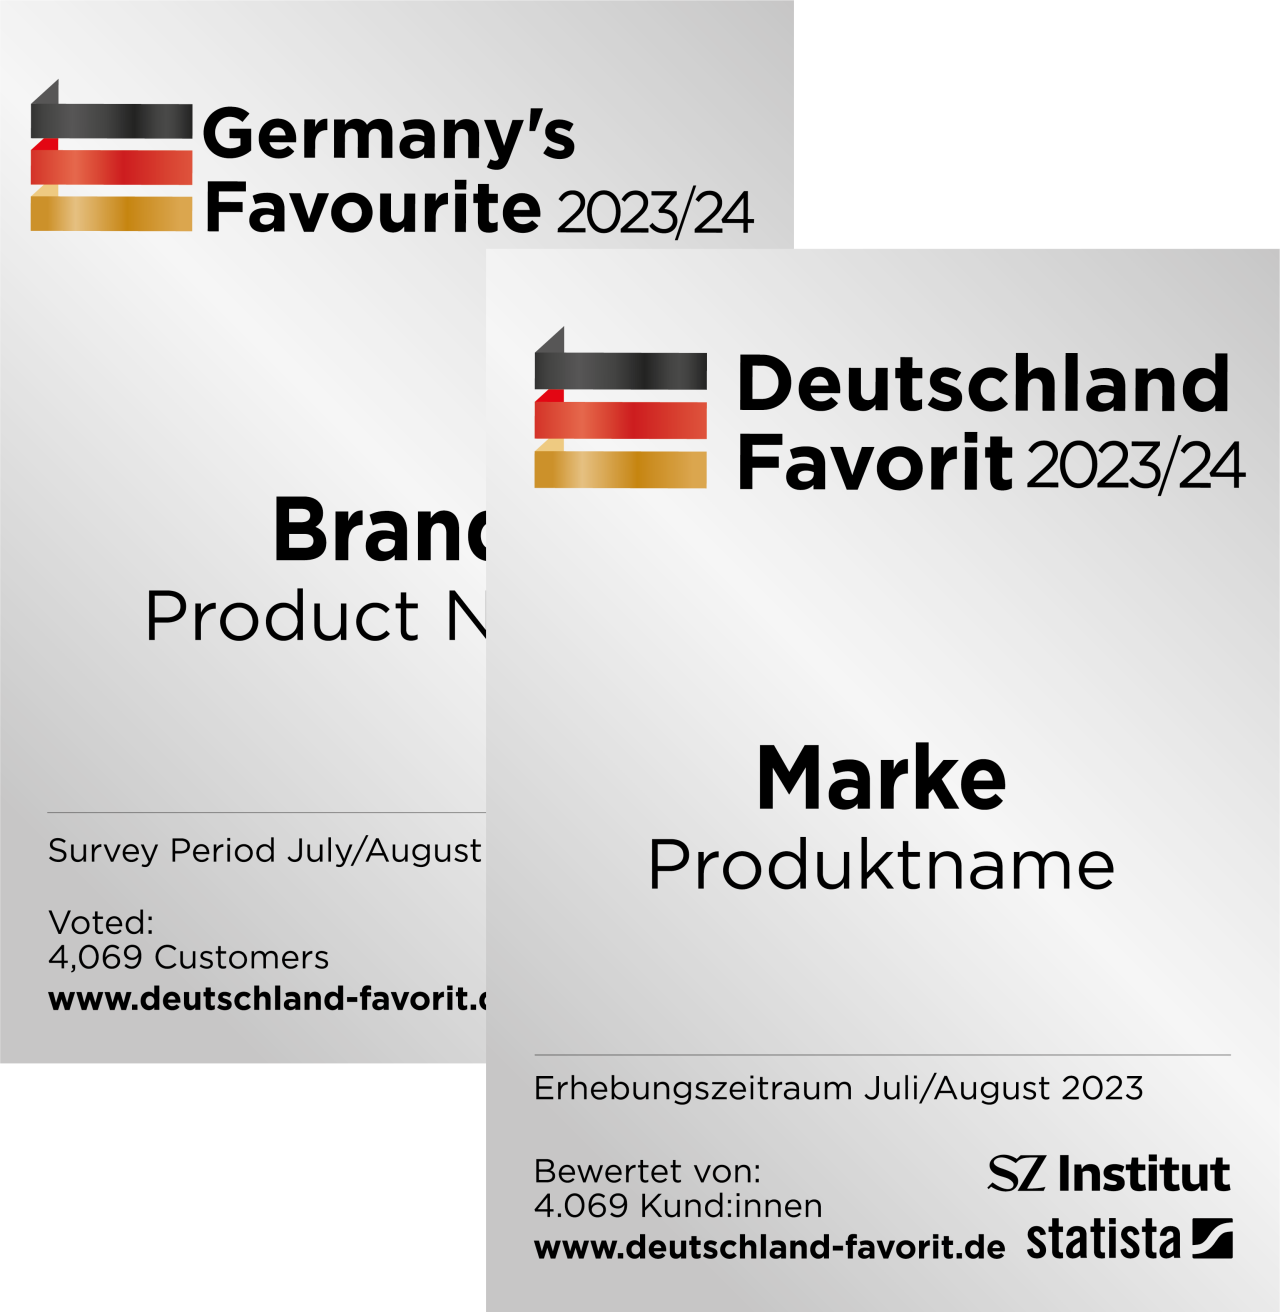 https://deutschland-favorit.de/wp-content/uploads/2023/04/SZ_Deutschland-Favorit2023-24_Logo_Siegel_DEEN-1280x1312.png